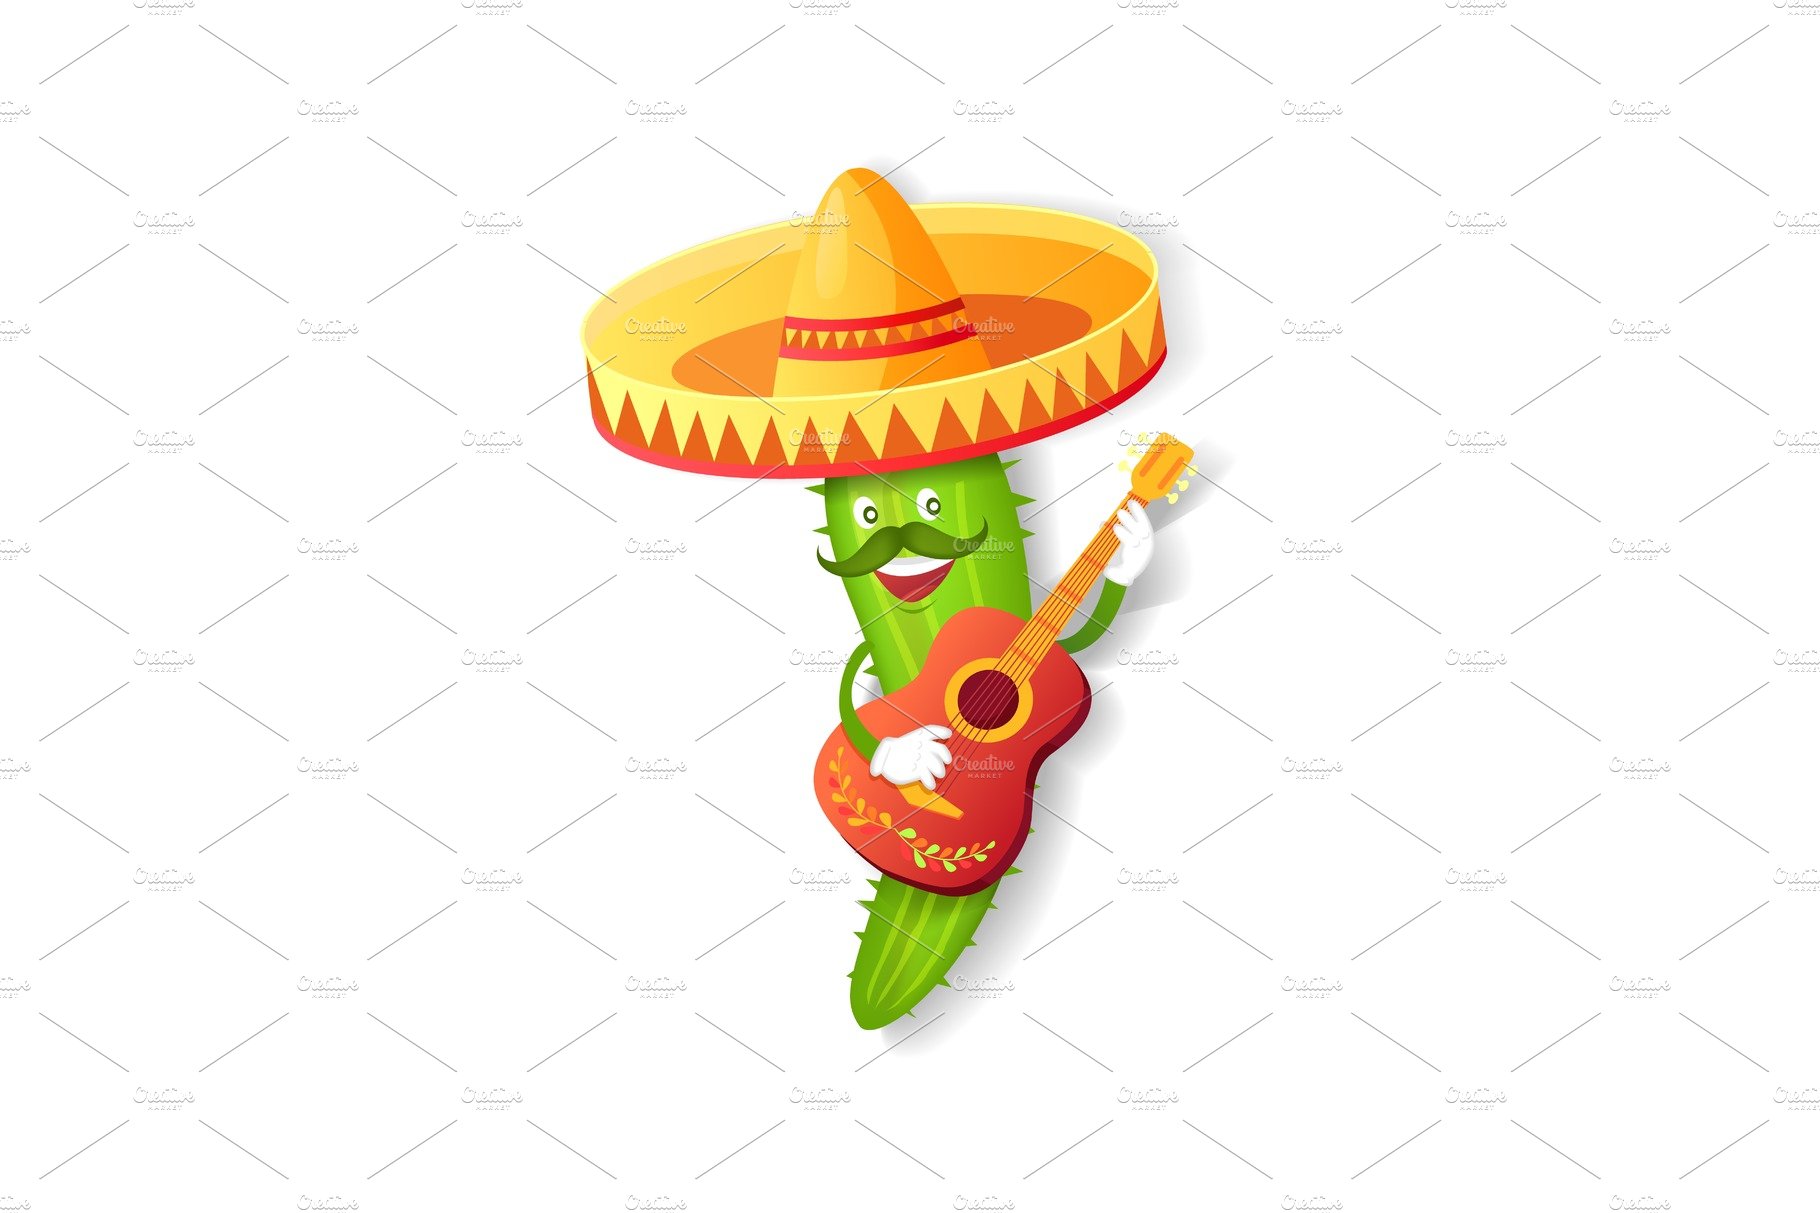 Mexican Cuctus in Sombrero, Guitar cover image.